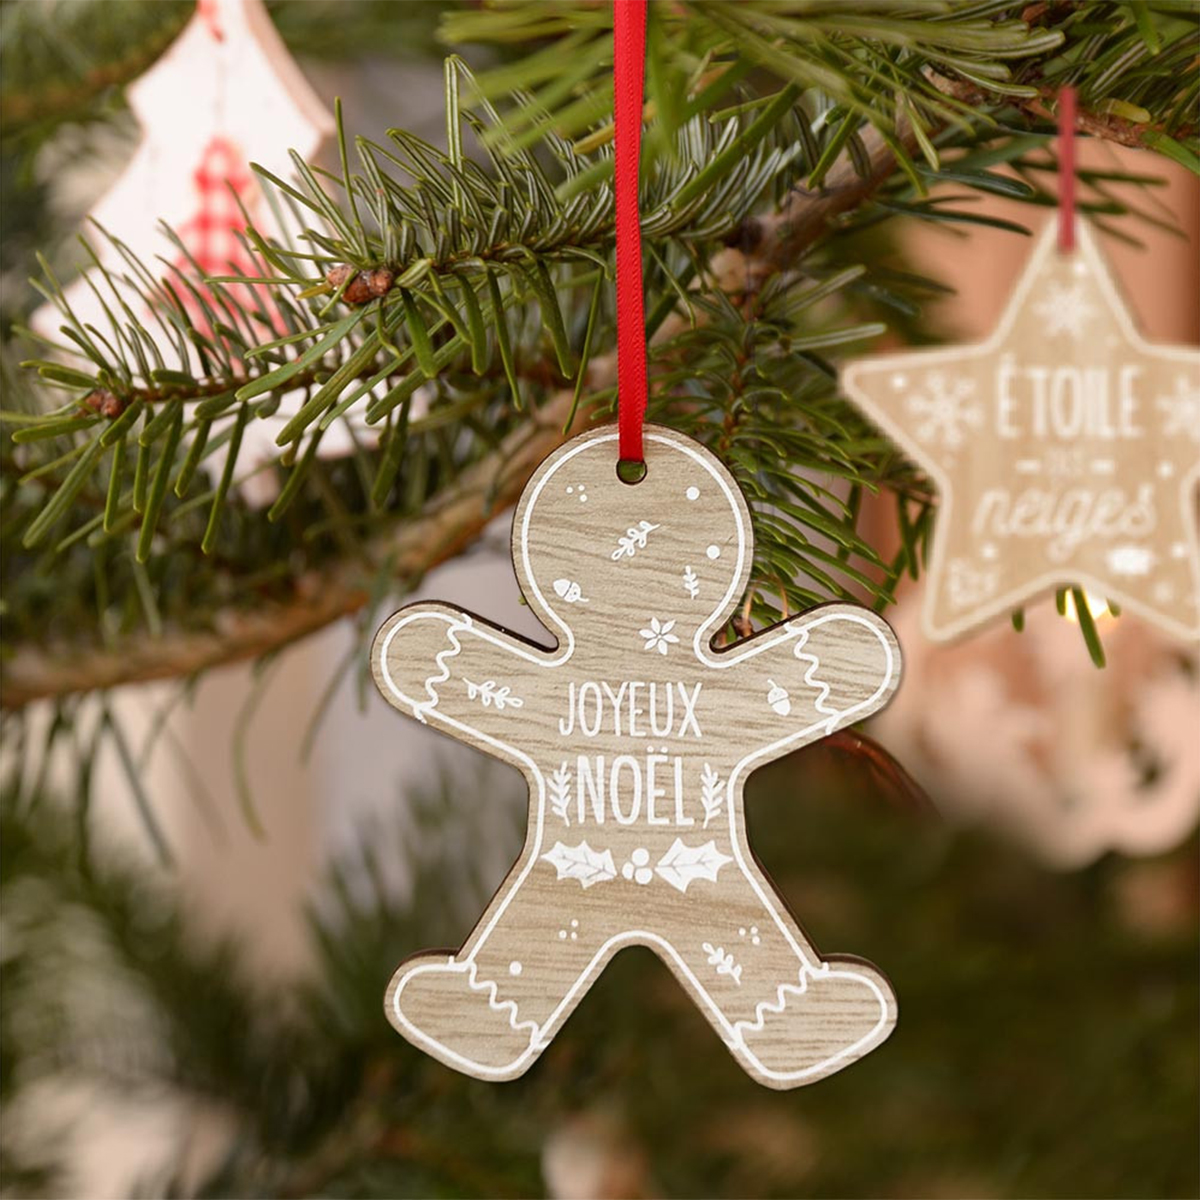 Tree decoration - Gingerbread Man